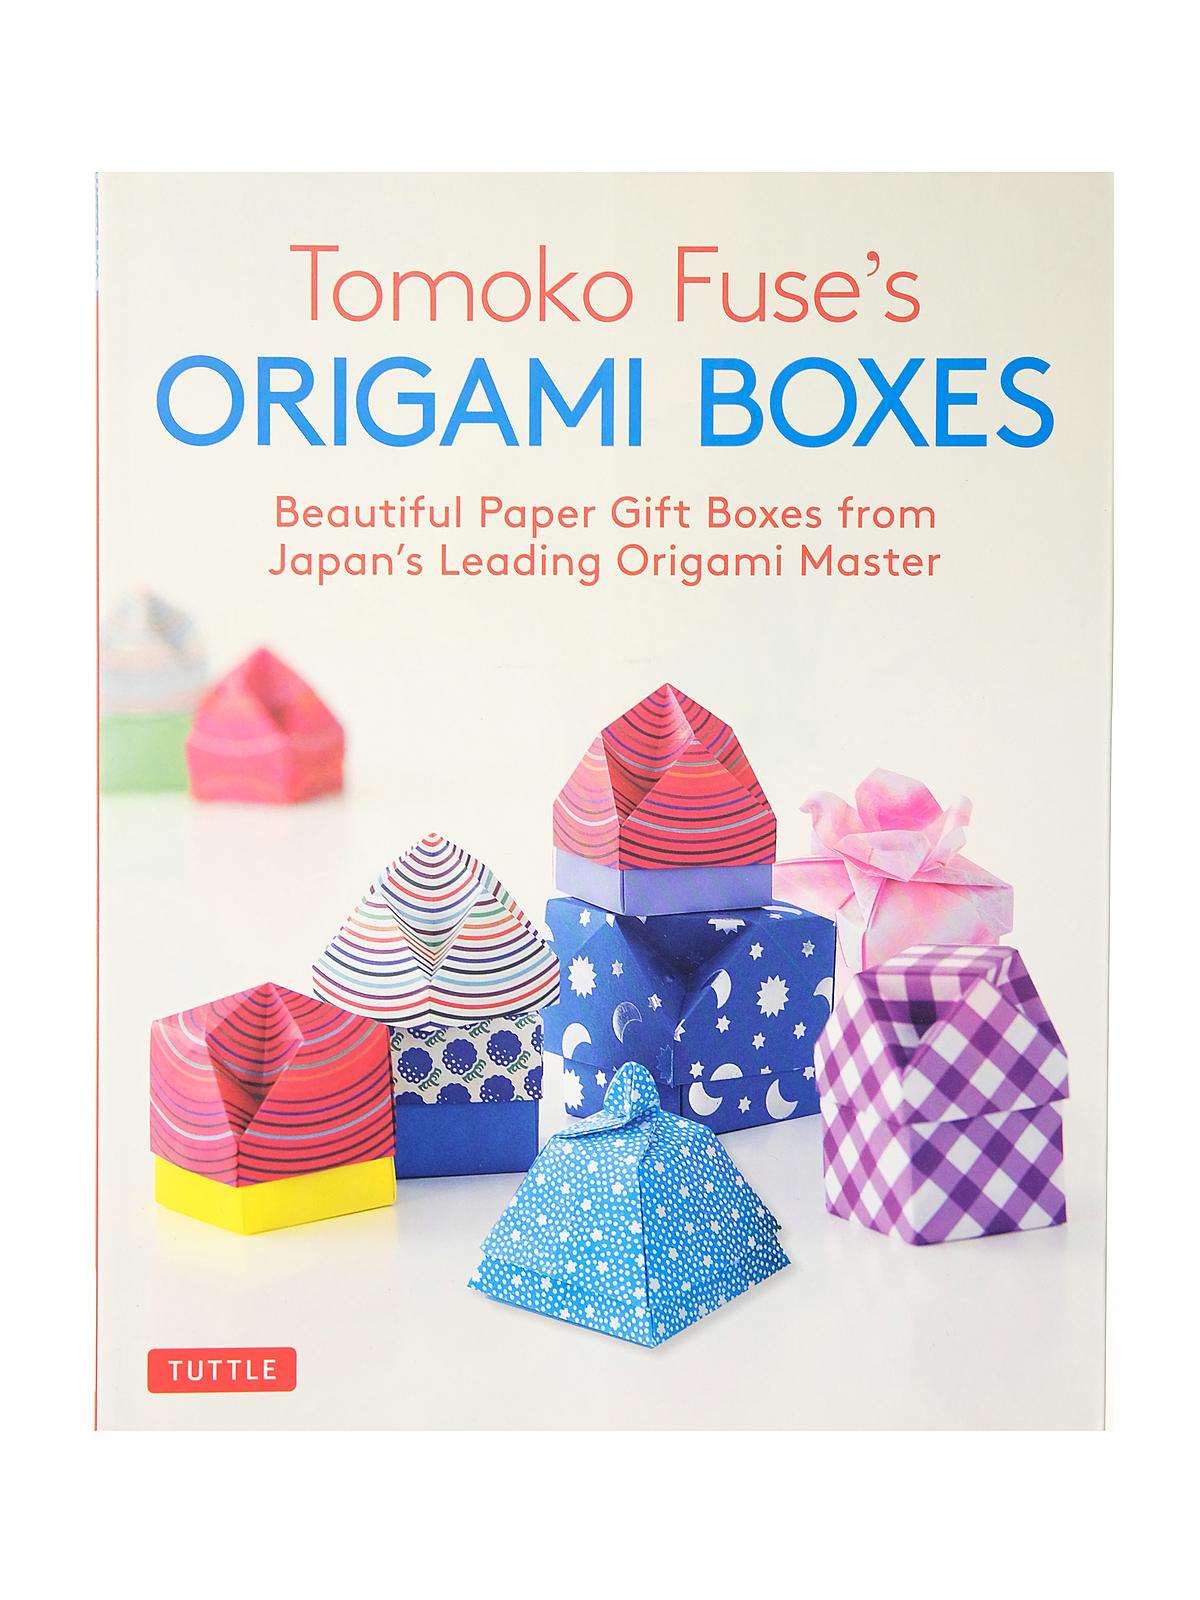 Tomoko Fuse's Origami Boxes each